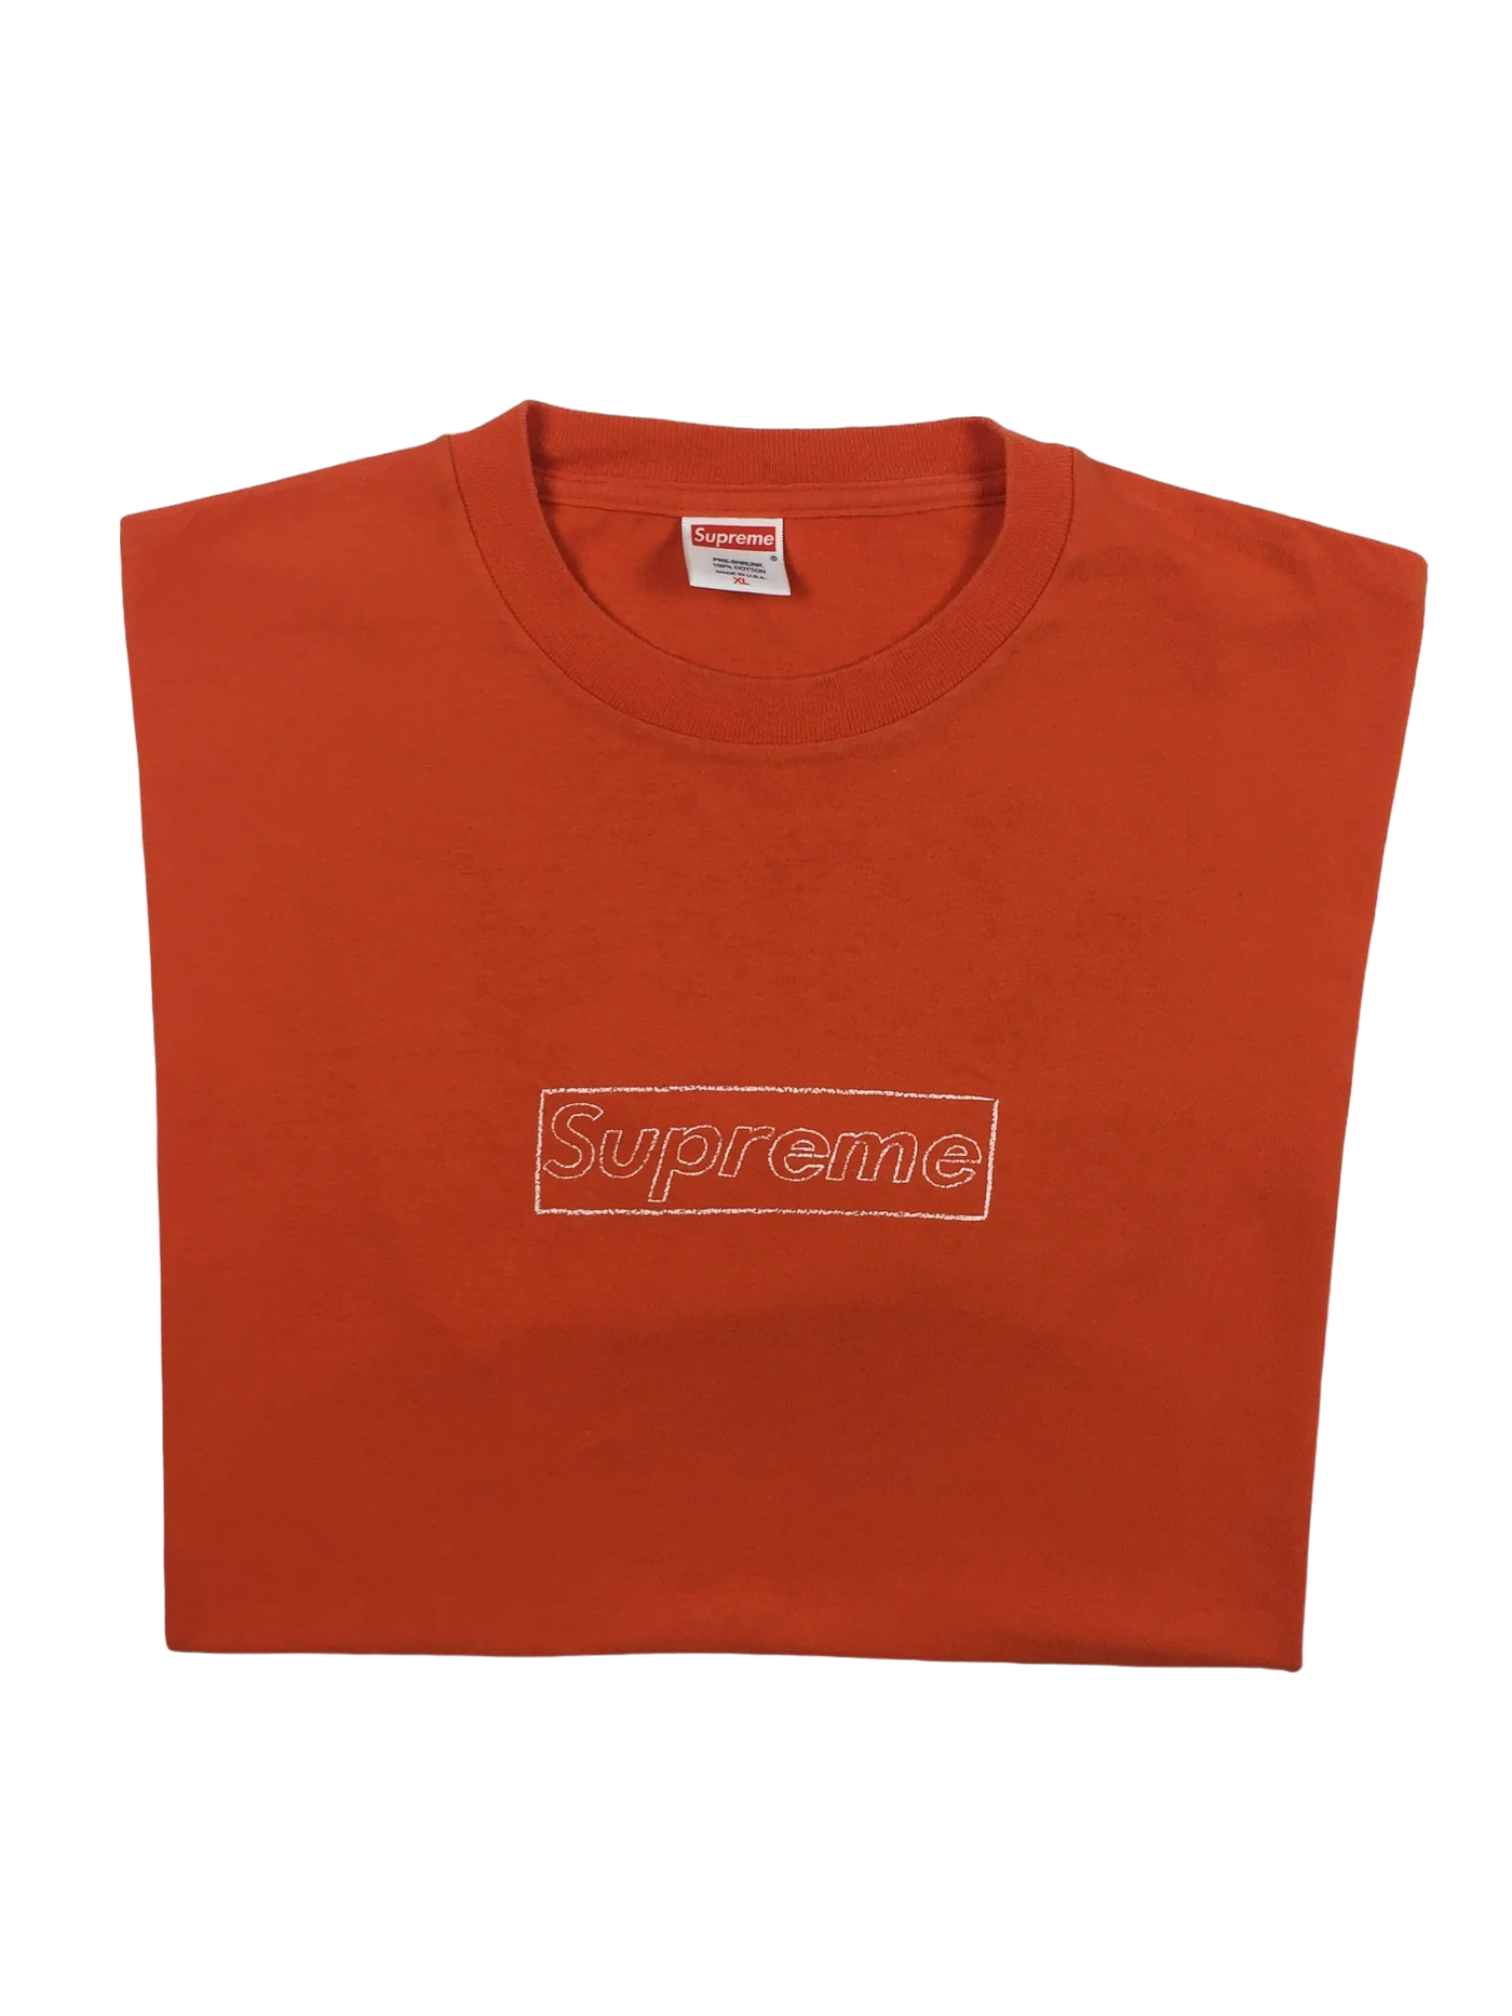 2002 Supreme KAWS Orange Box Logo Tee